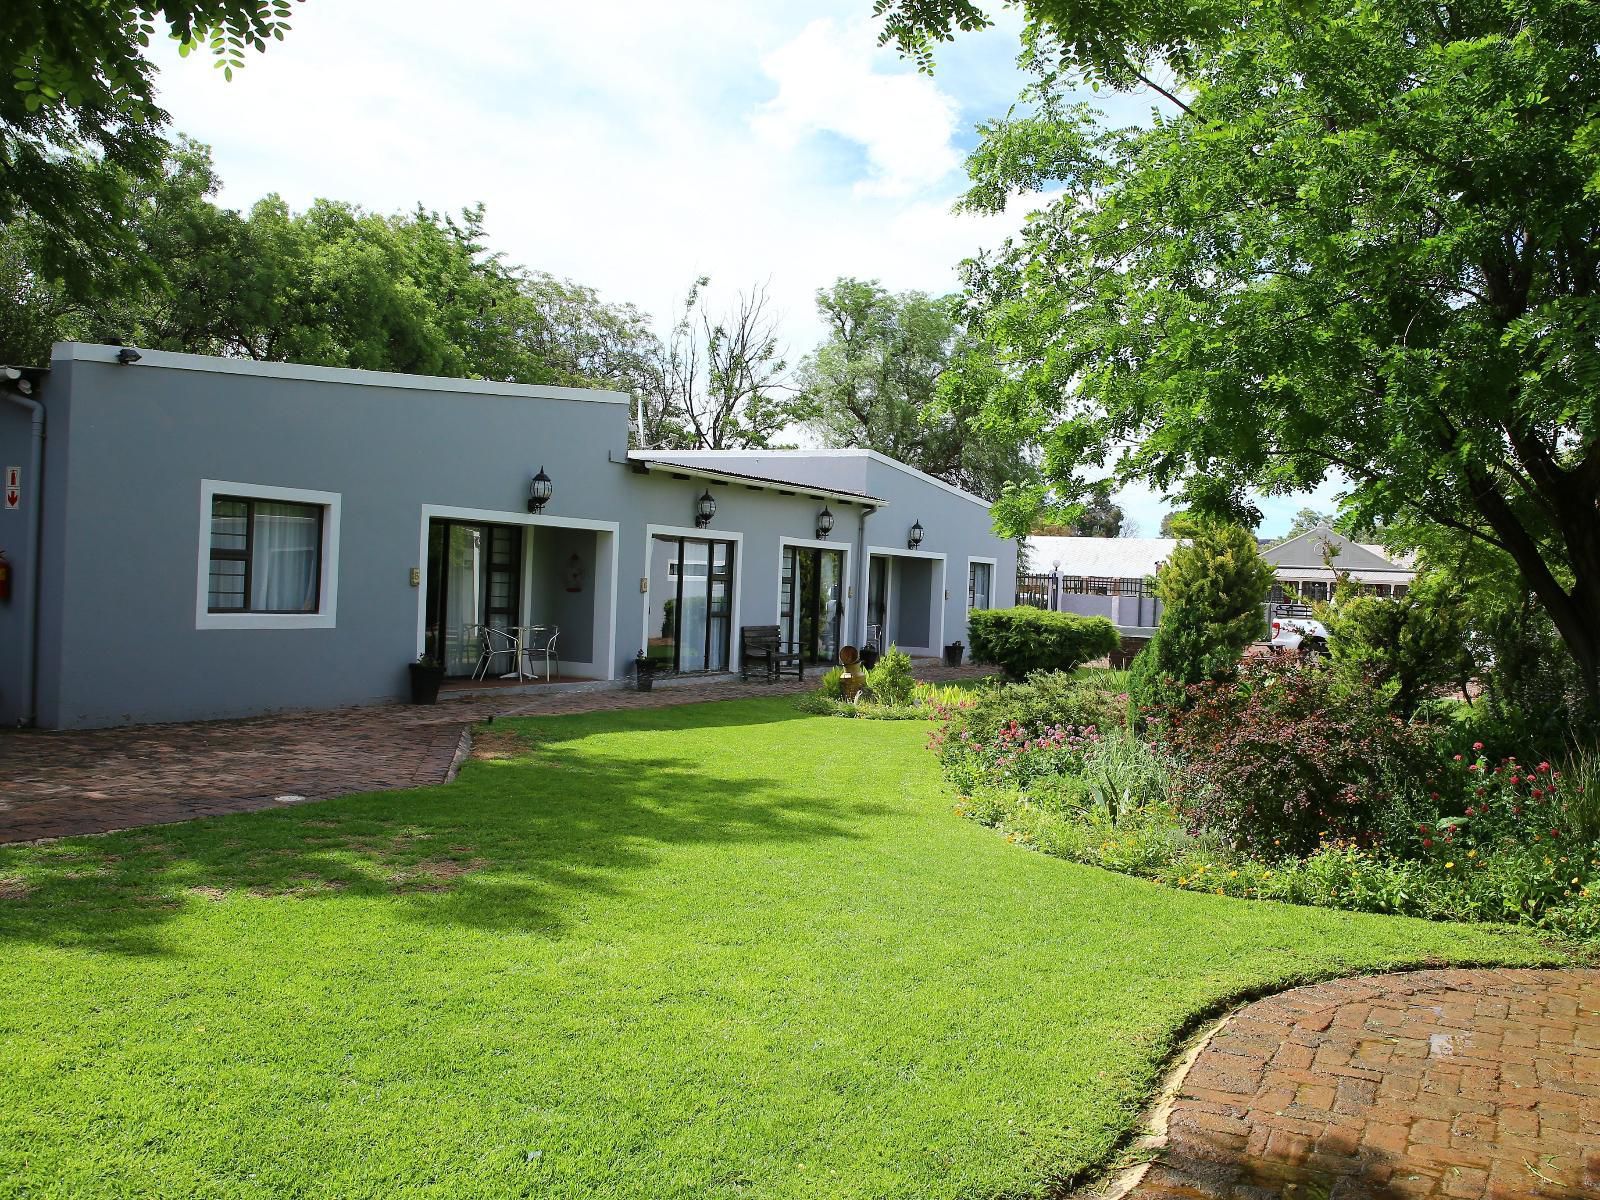 Desert Inn Guest House Middelburg Eastern Cape Eastern Cape South Africa House, Building, Architecture, Garden, Nature, Plant